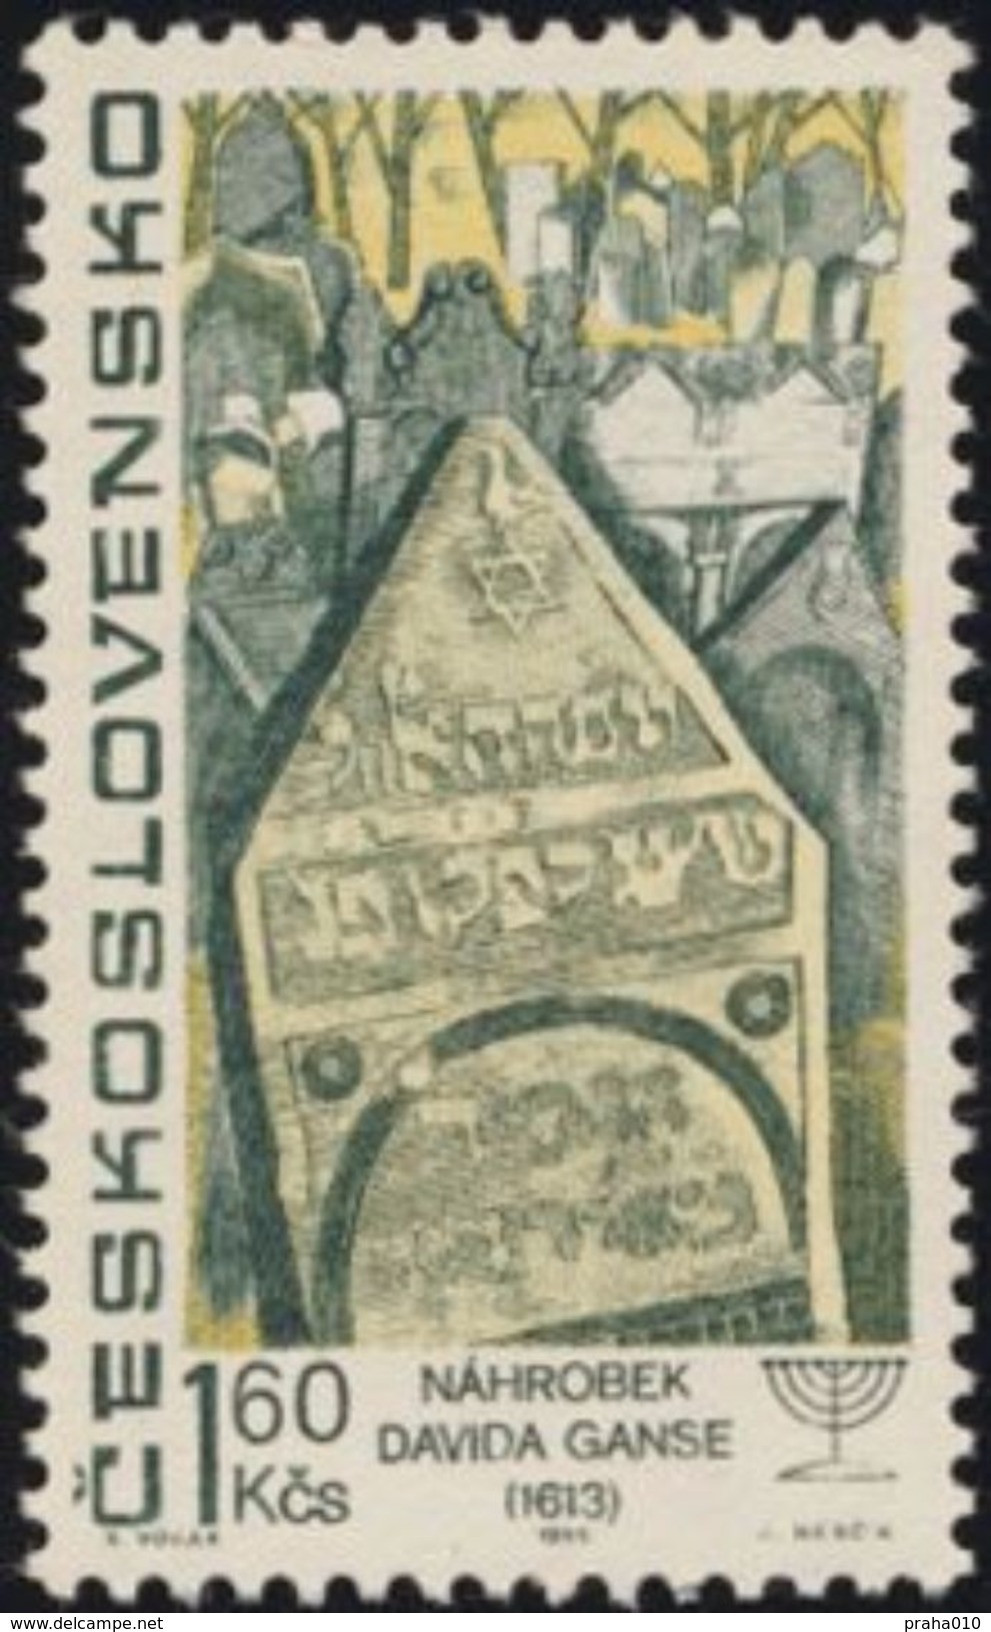 Czechoslovakia / Stamps (1967) 1620: Judaica - The Jewish Cemetery In Prague, Tombstone Of David Gans; Painter: K. Vodak - Guidaismo